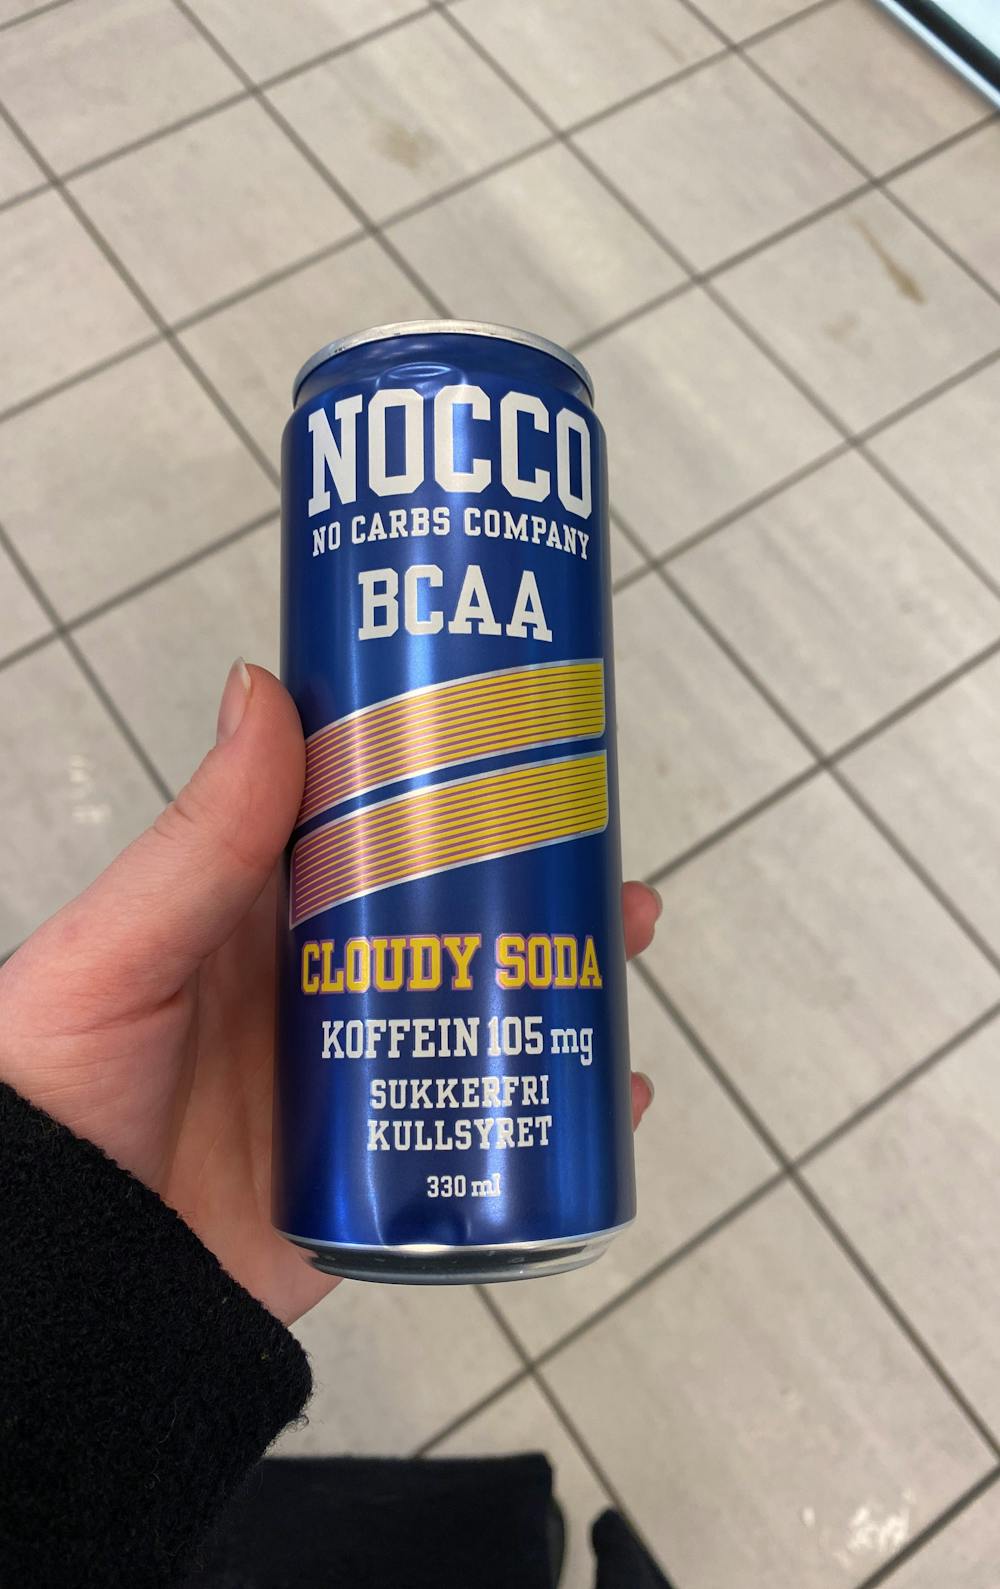 Cloudy soda, Nocco